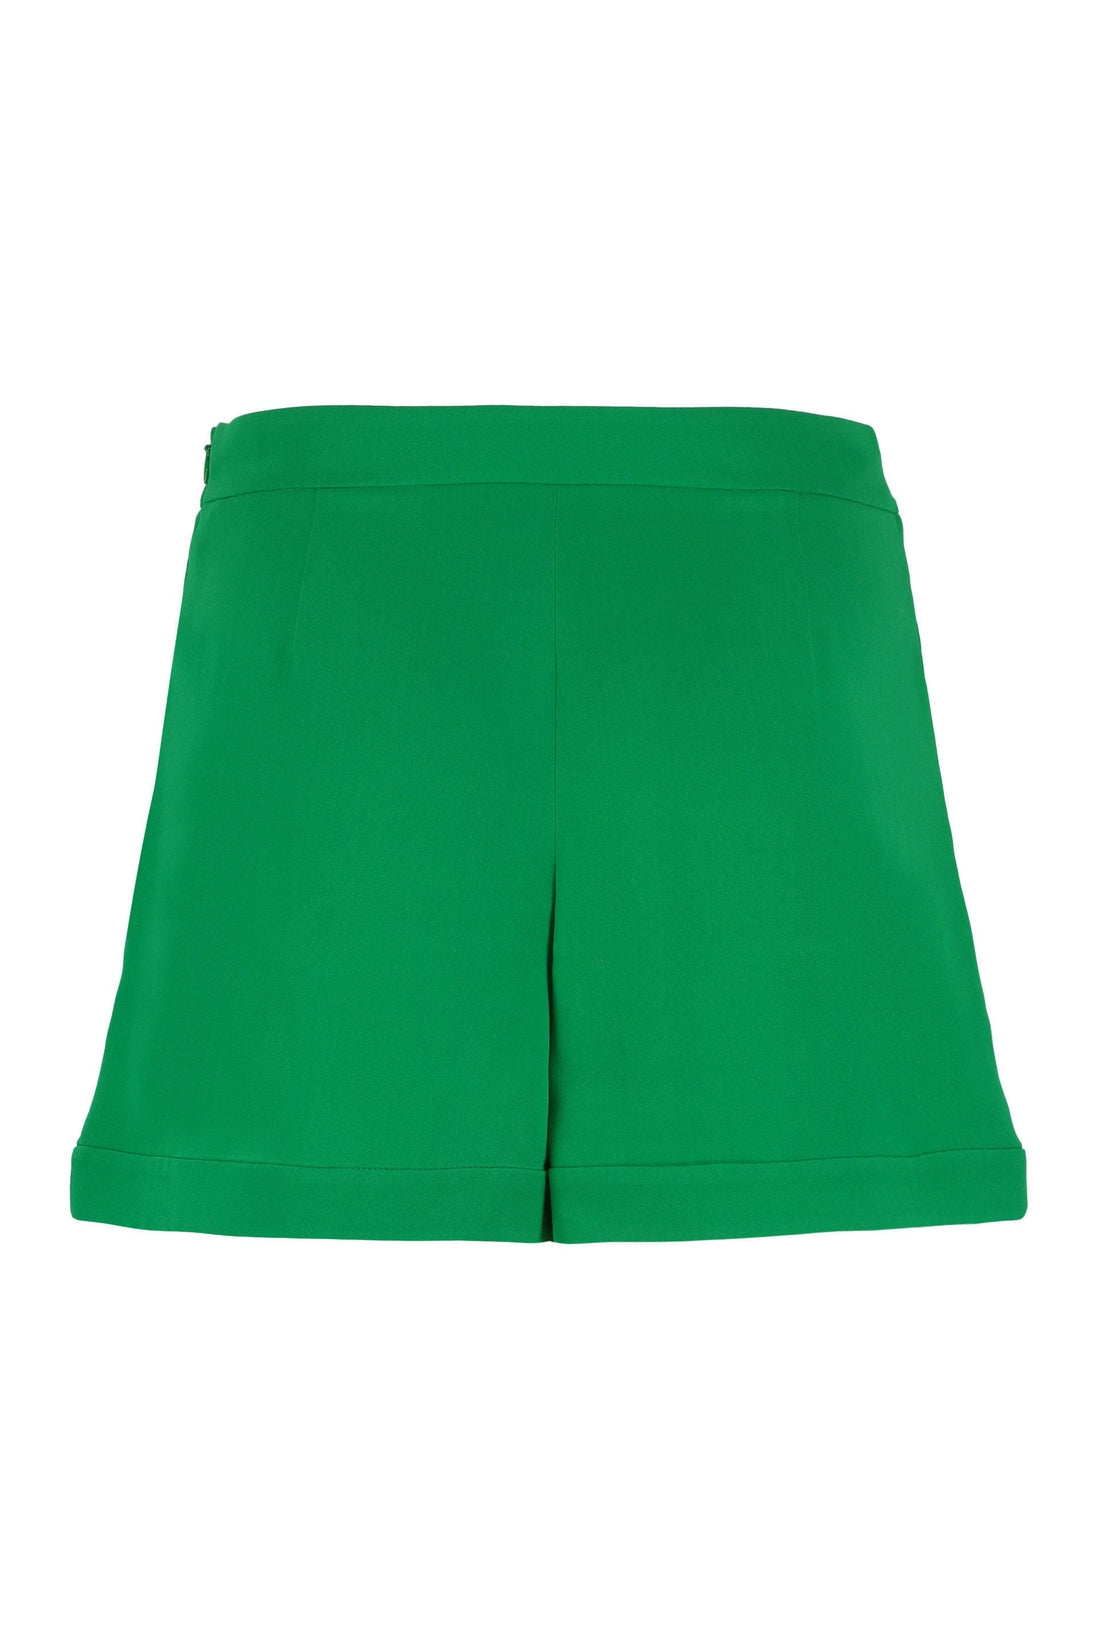 Valentino-OUTLET-SALE-Silk shorts-ARCHIVIST